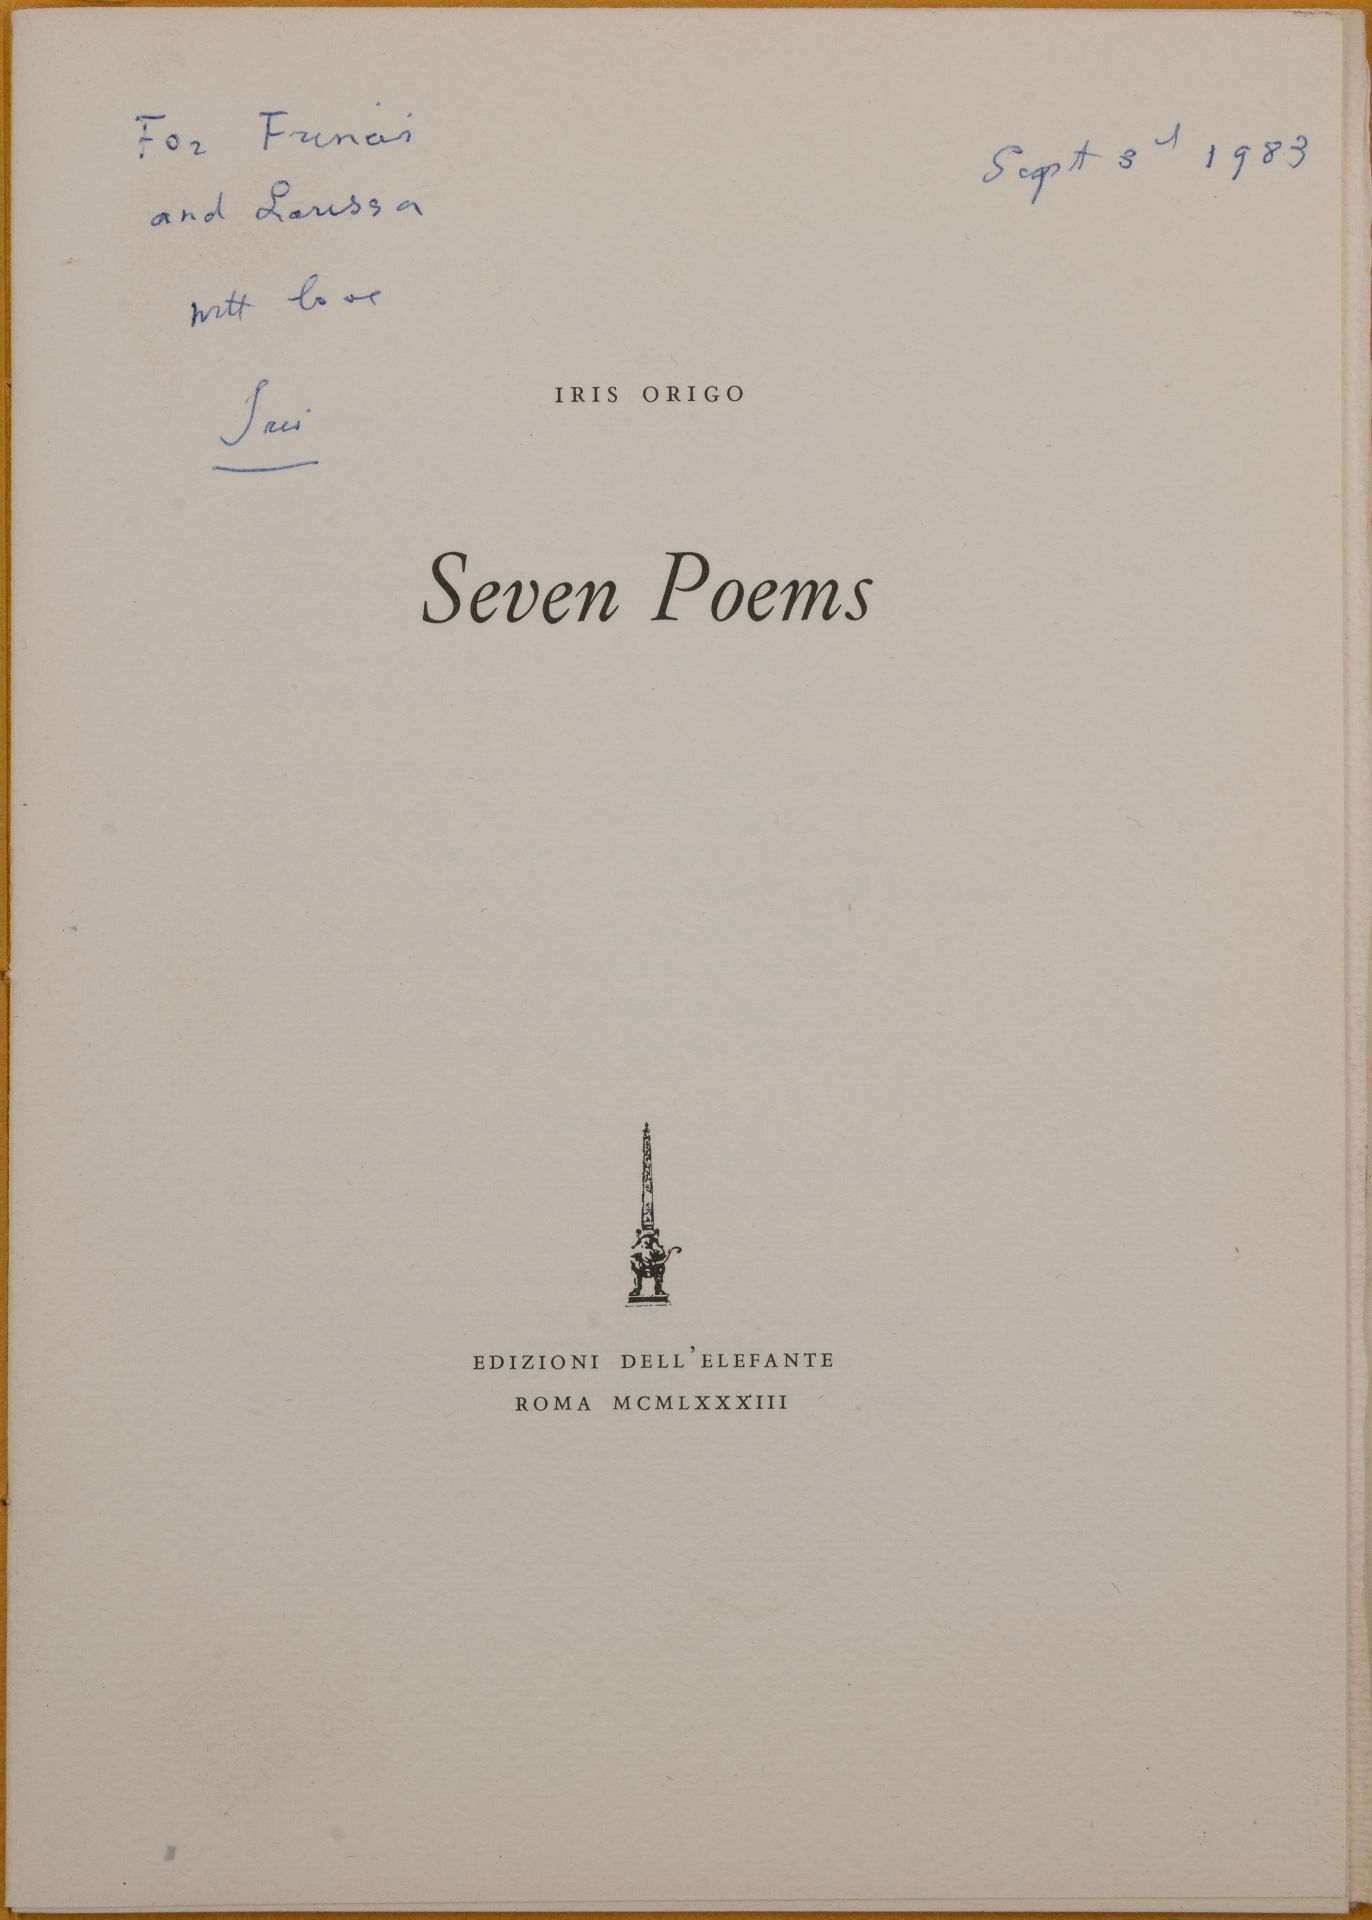 Origo (Iris) Seven Poems - Edizioni Dell'Elefante Roma 1983 - signed by the author plus Rylands (